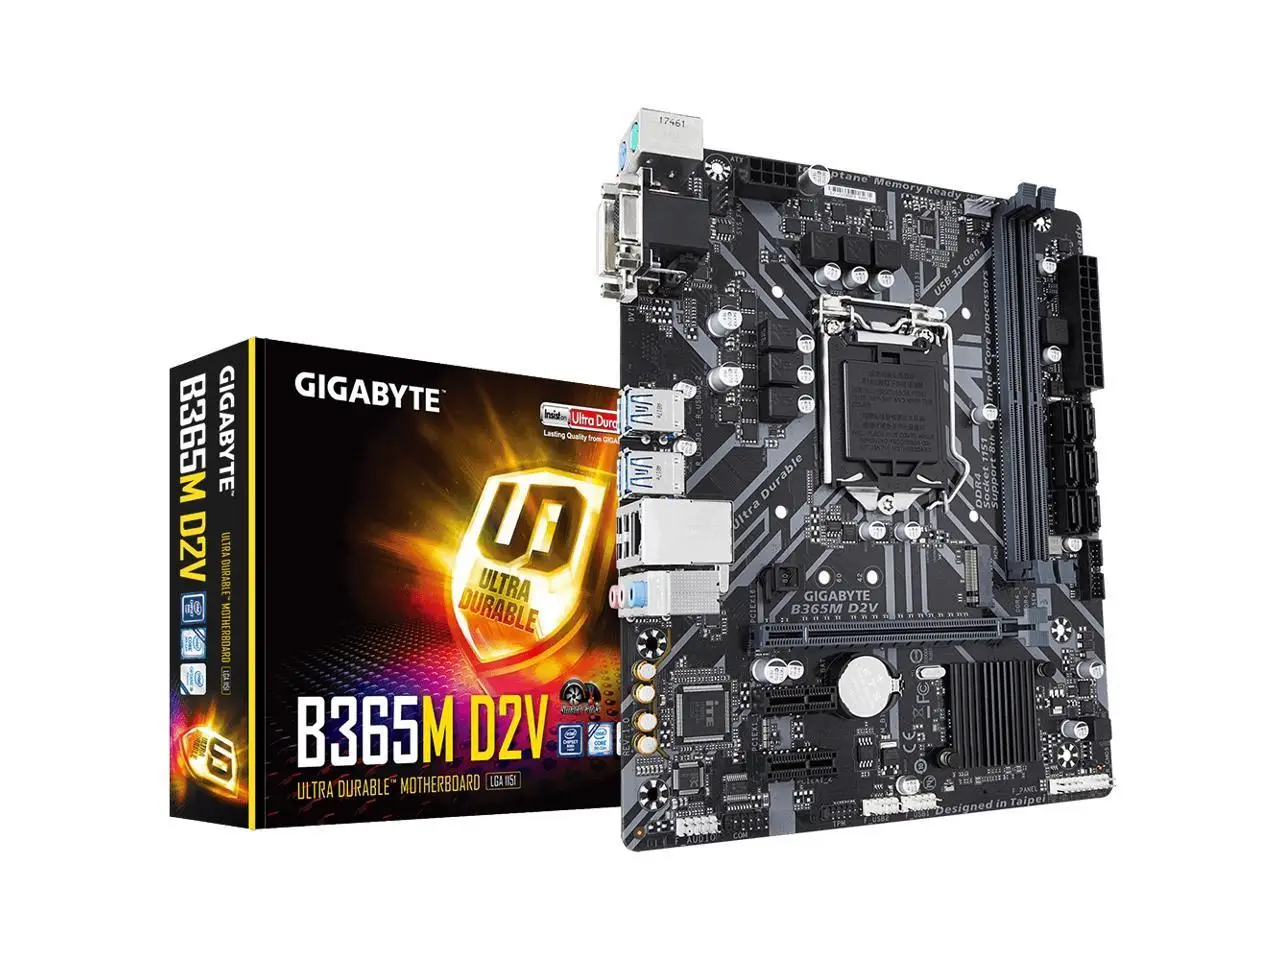 

Gigabyte Motherboard Intel B365 D2V LGA 1151 Micro ATX DDR4-SDRAM Motherboard PC Computer Game